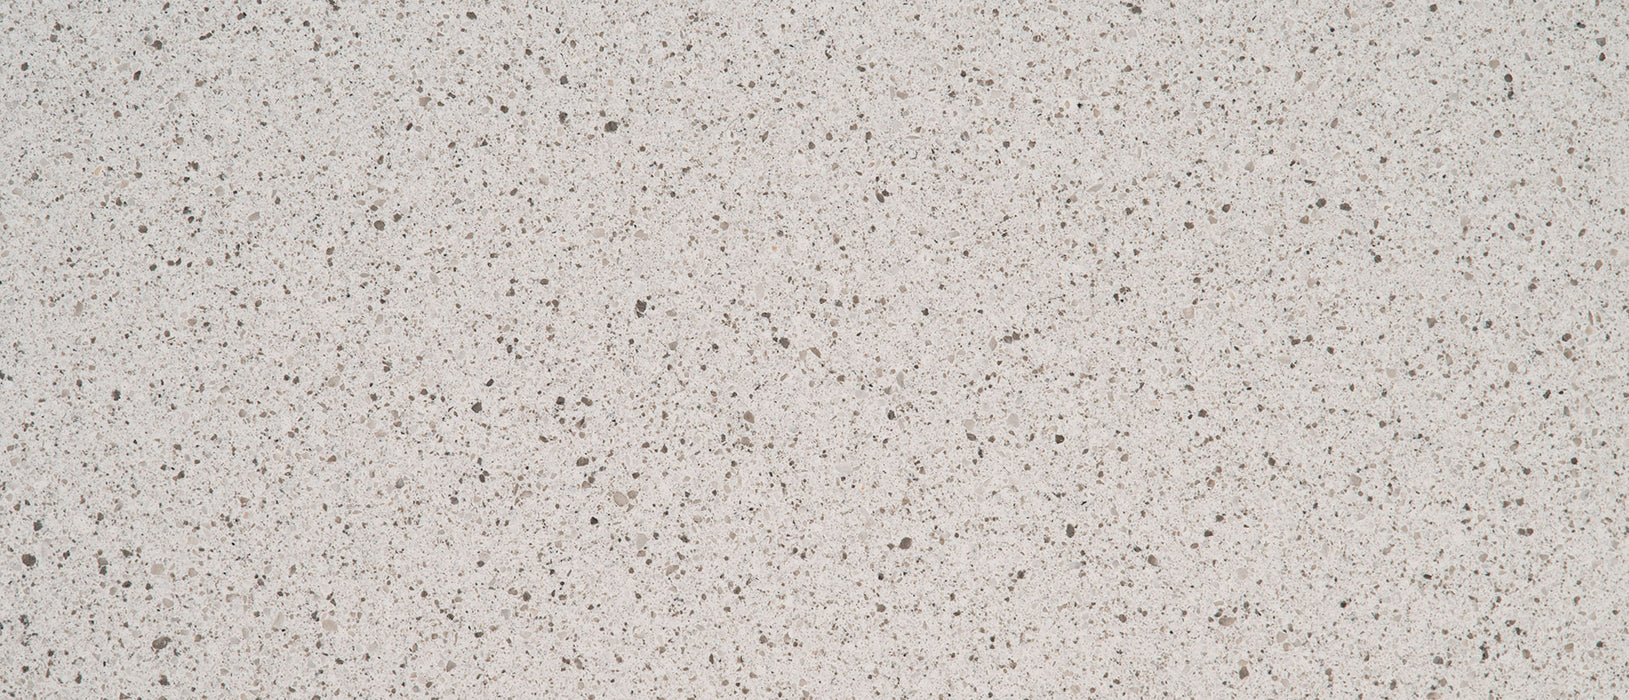 Peppercorn white quartz countertop close up